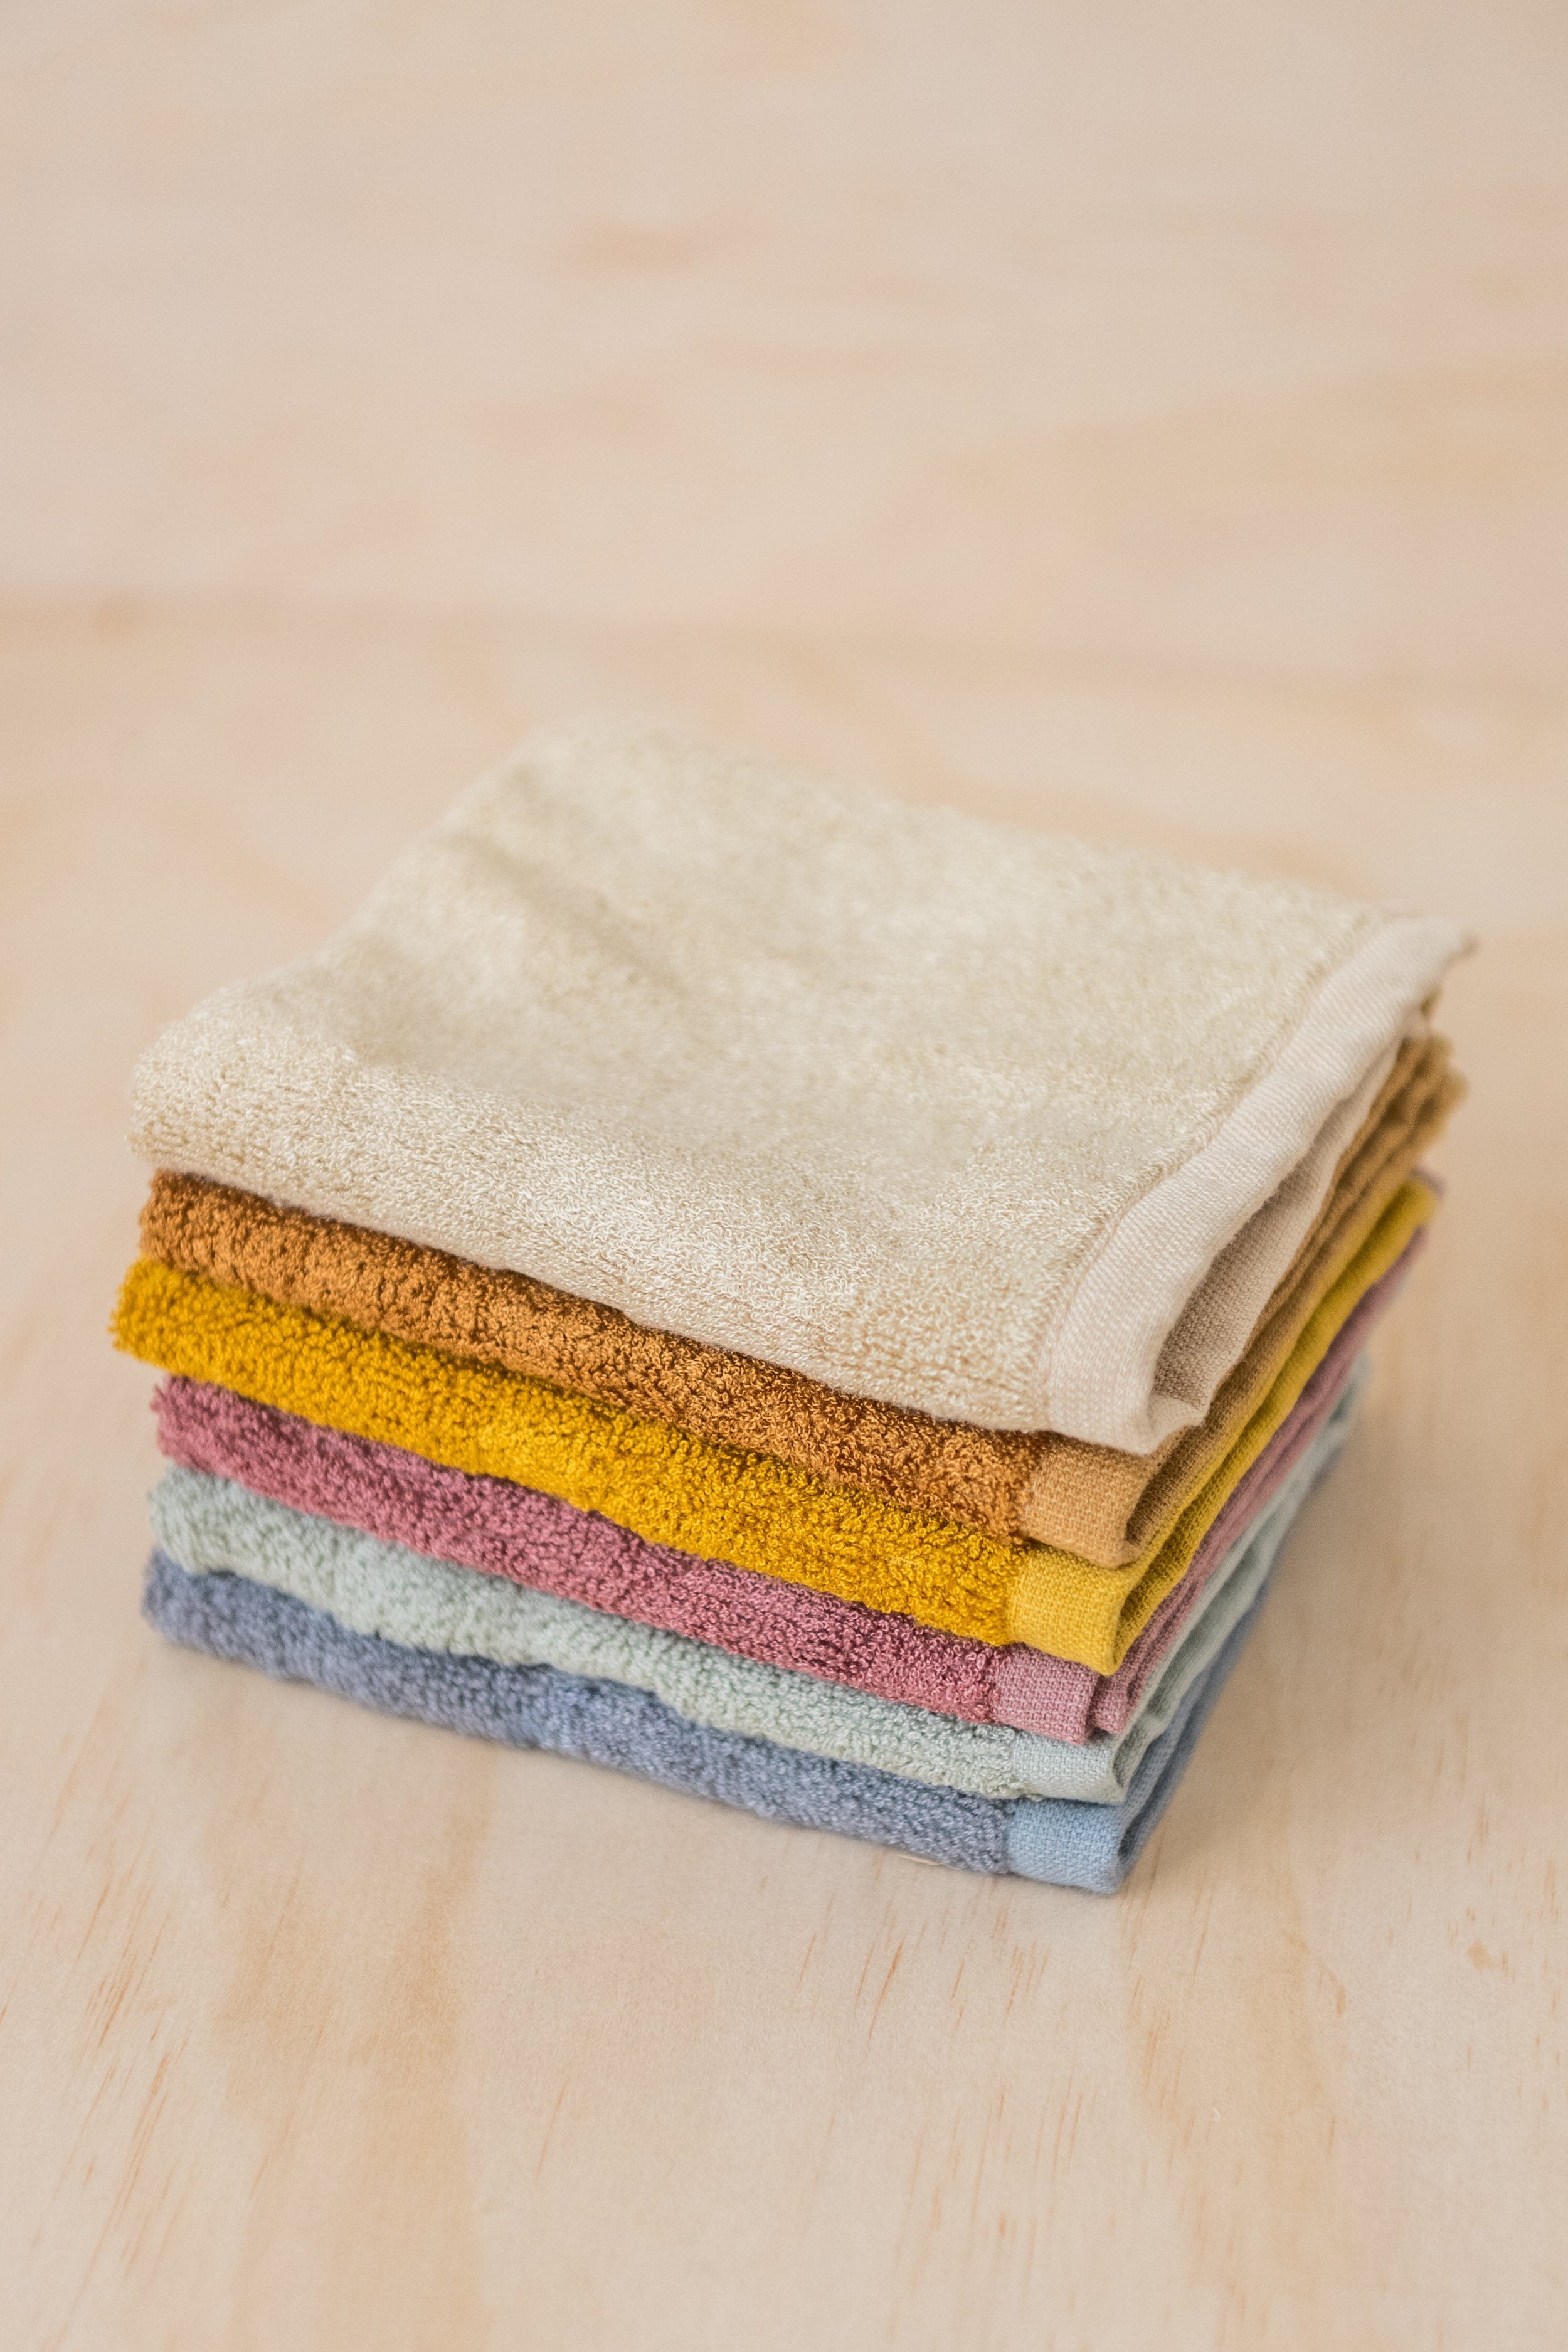 Kiin baby Wash Cloth - 3 pack. Sage